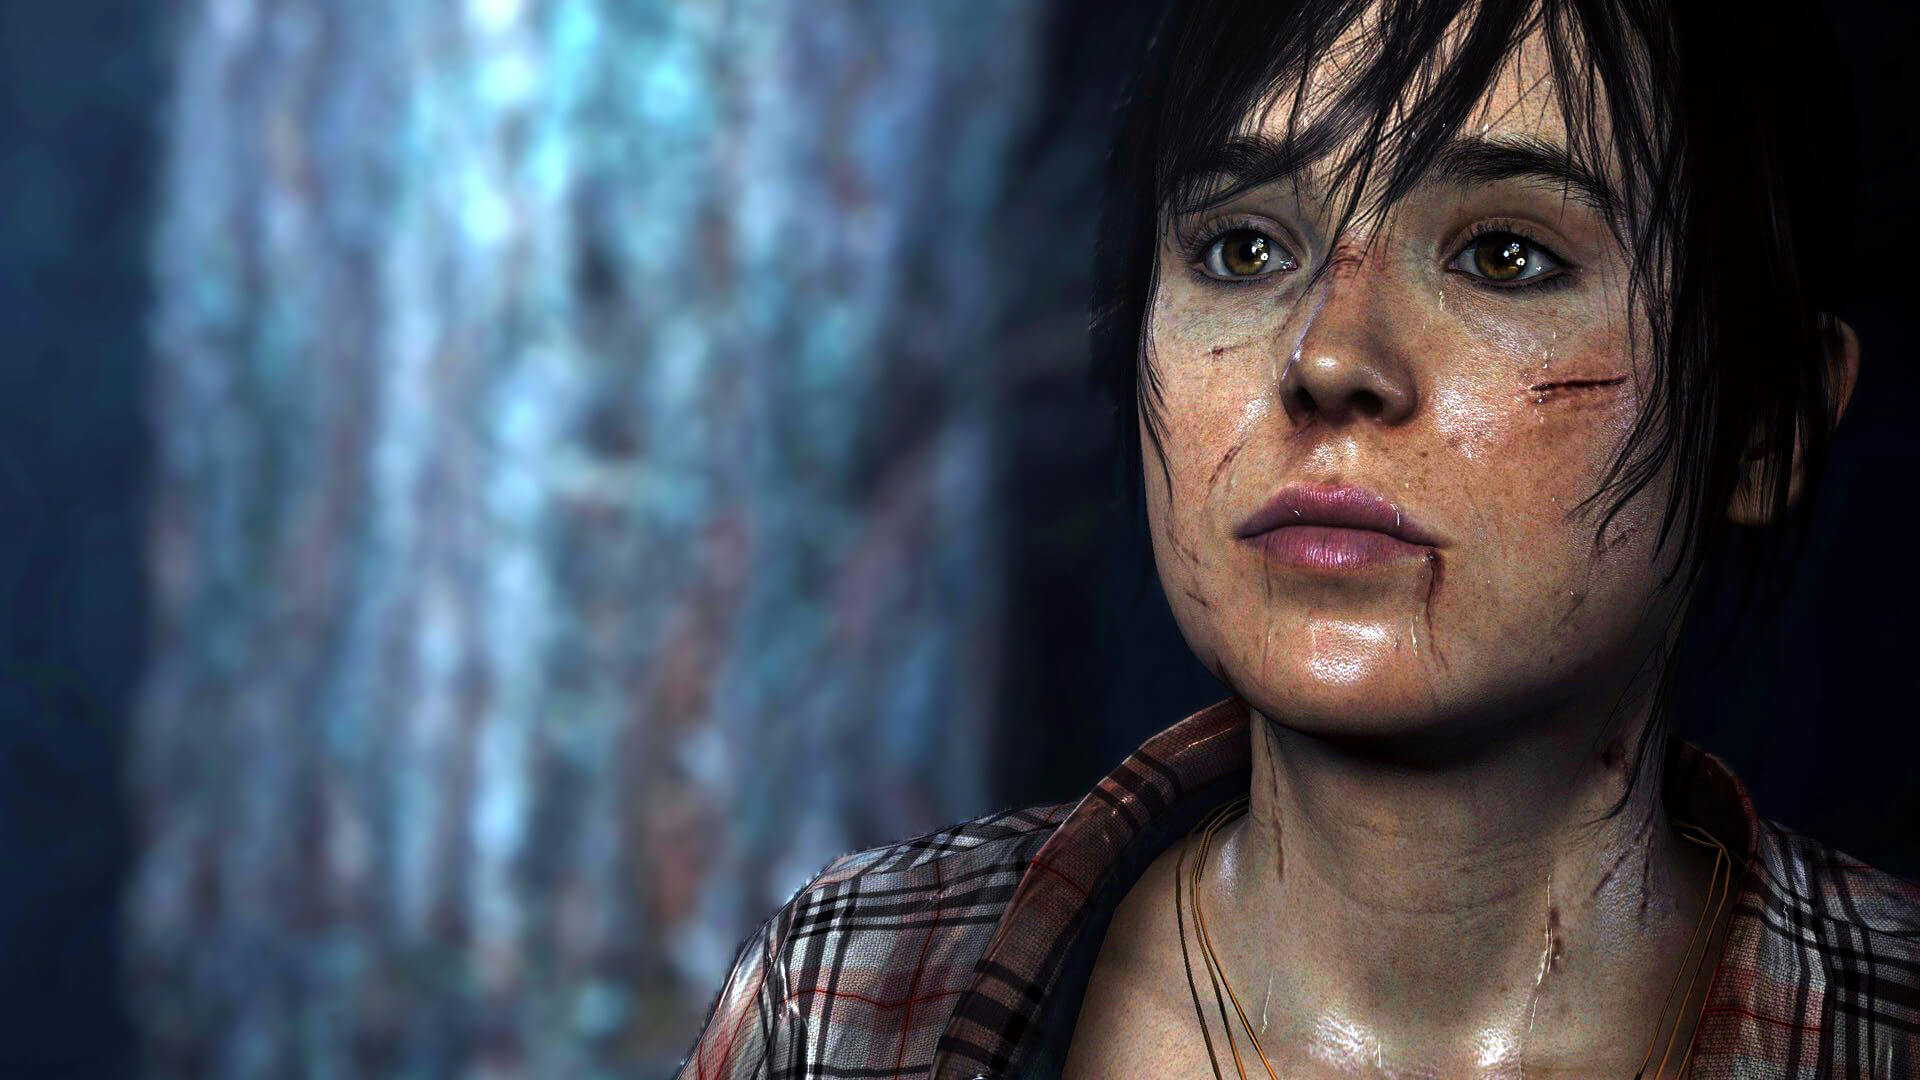 Steam Announcement Trailer - Detroit: Become Human, Beyond: Two Souls,  Heavy Rain